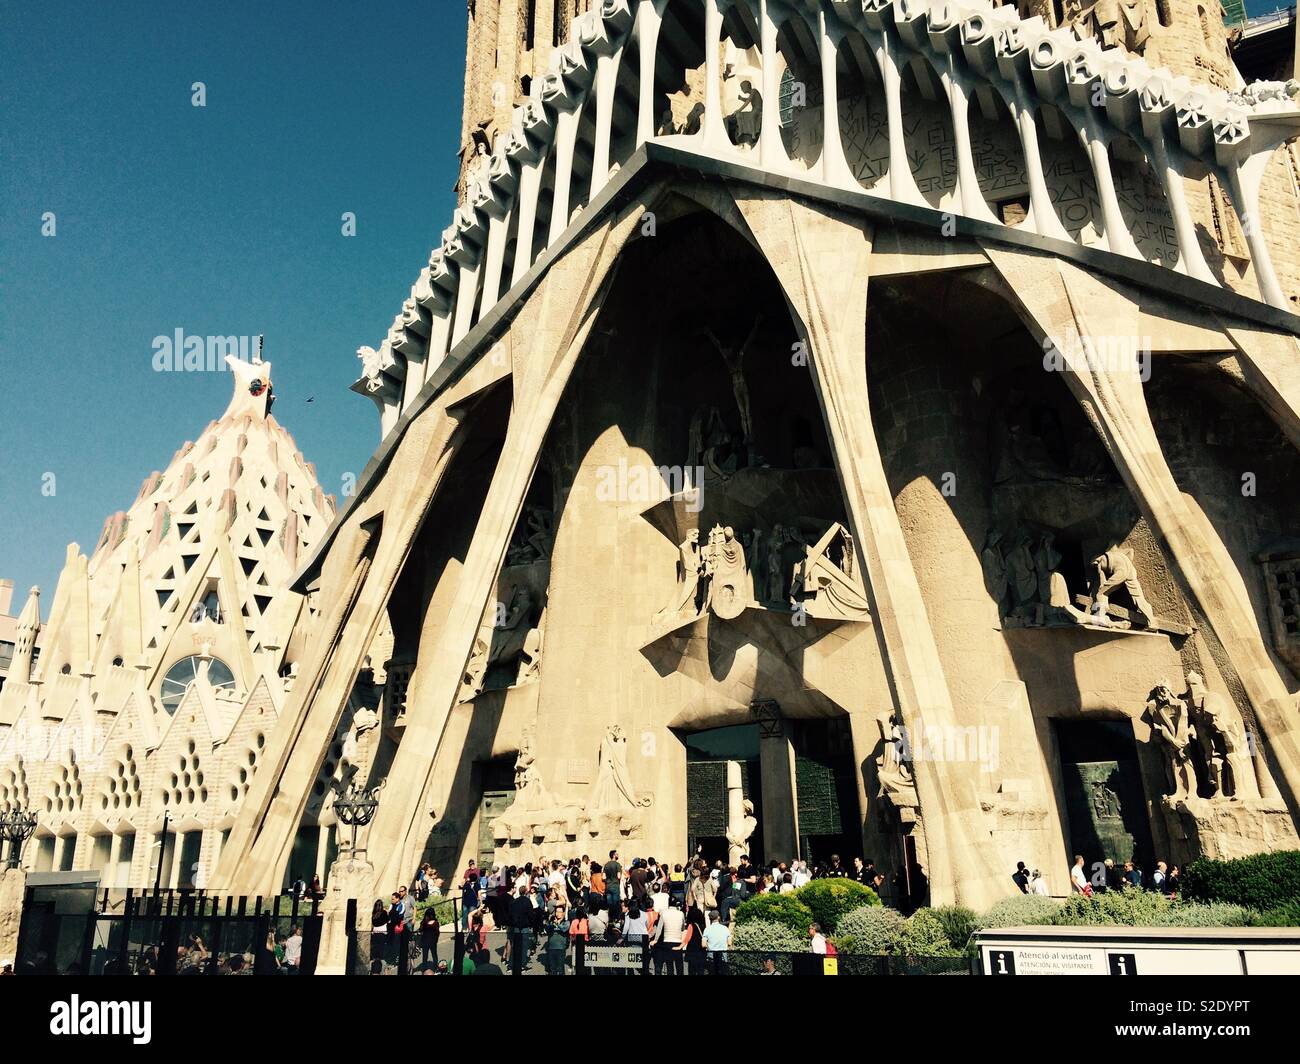 Portion of Sagrada Familia basilica with queue of tourists waiting to get inside Barcelona Spain Stock Photo